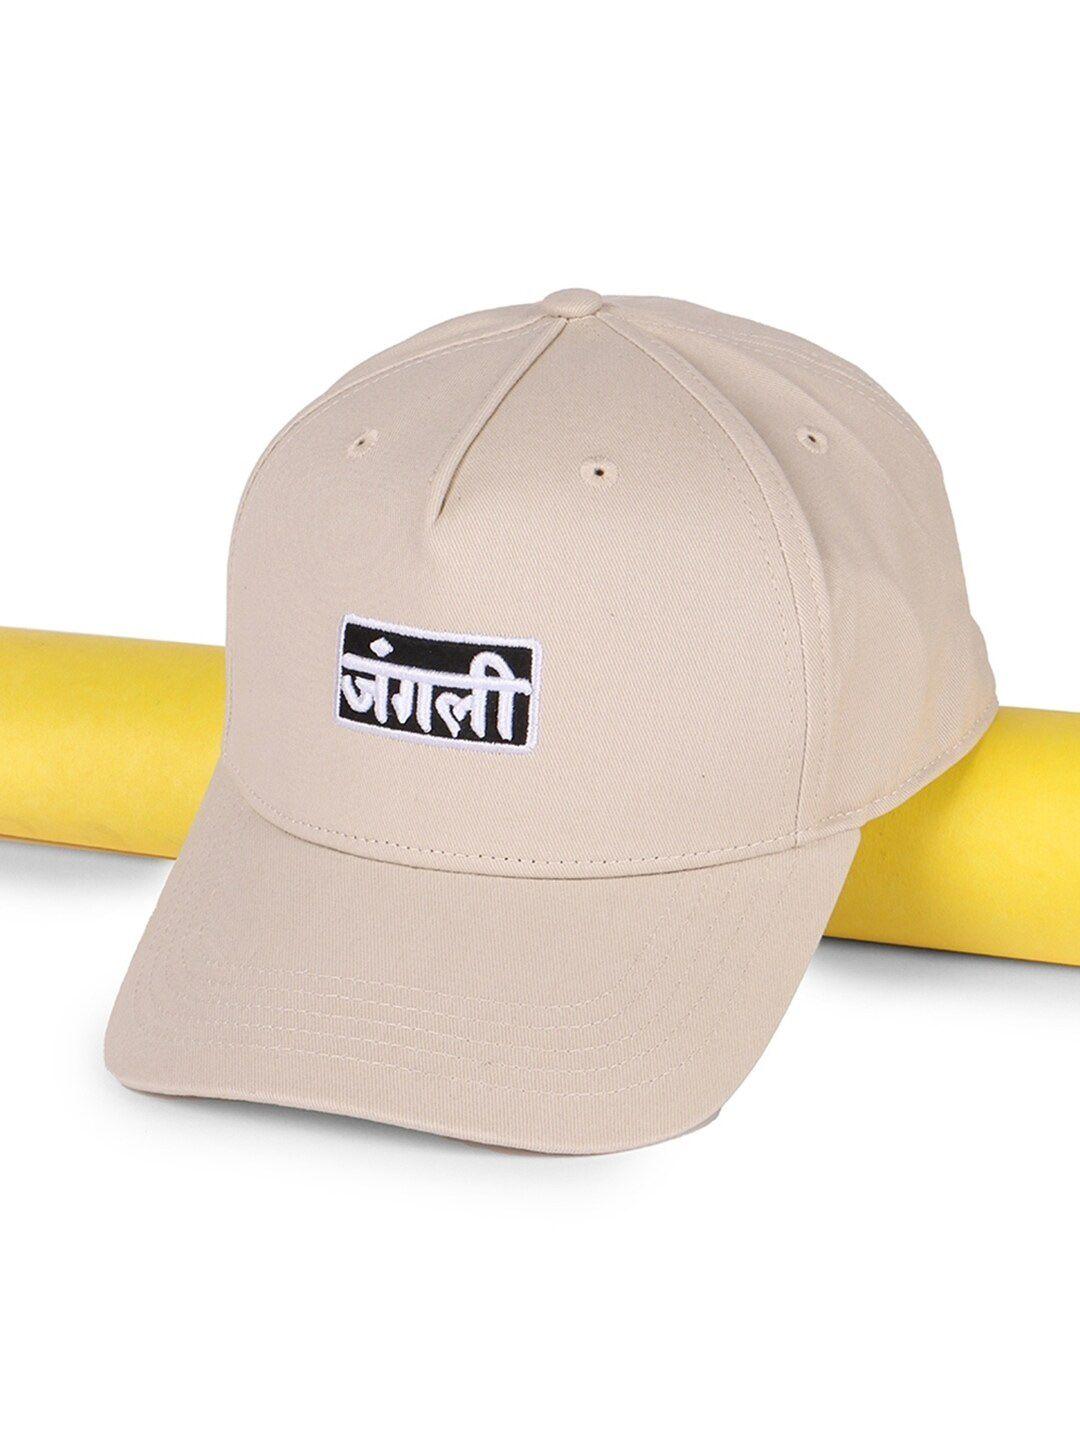 bewakoof unisex junglee printed cotton baseball cap